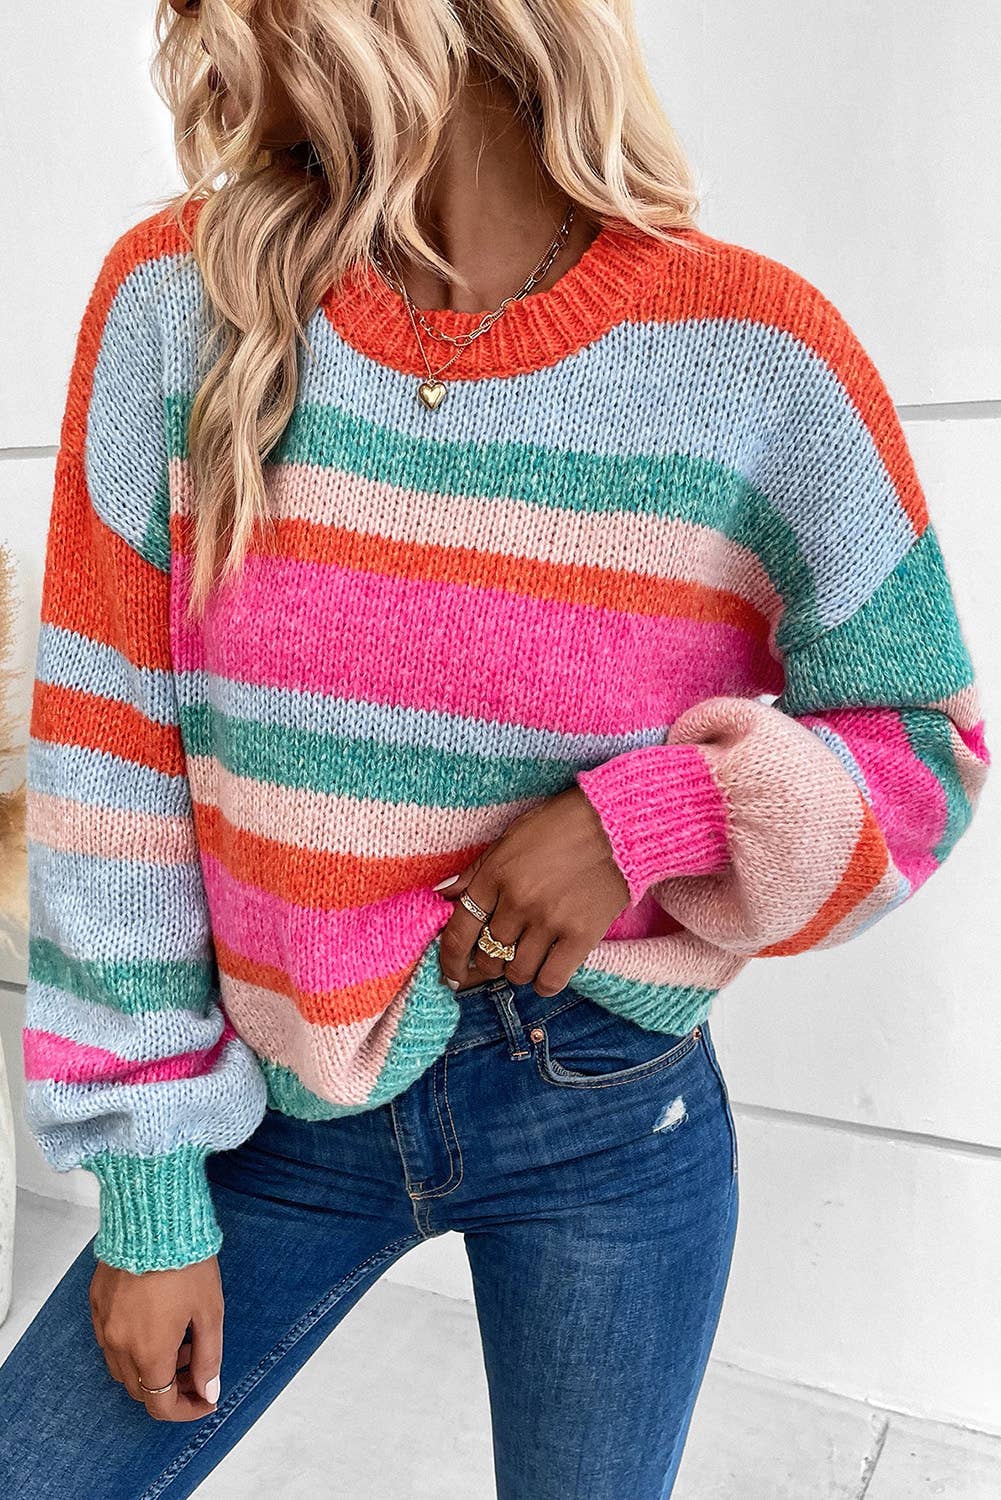 The Mara Sweater